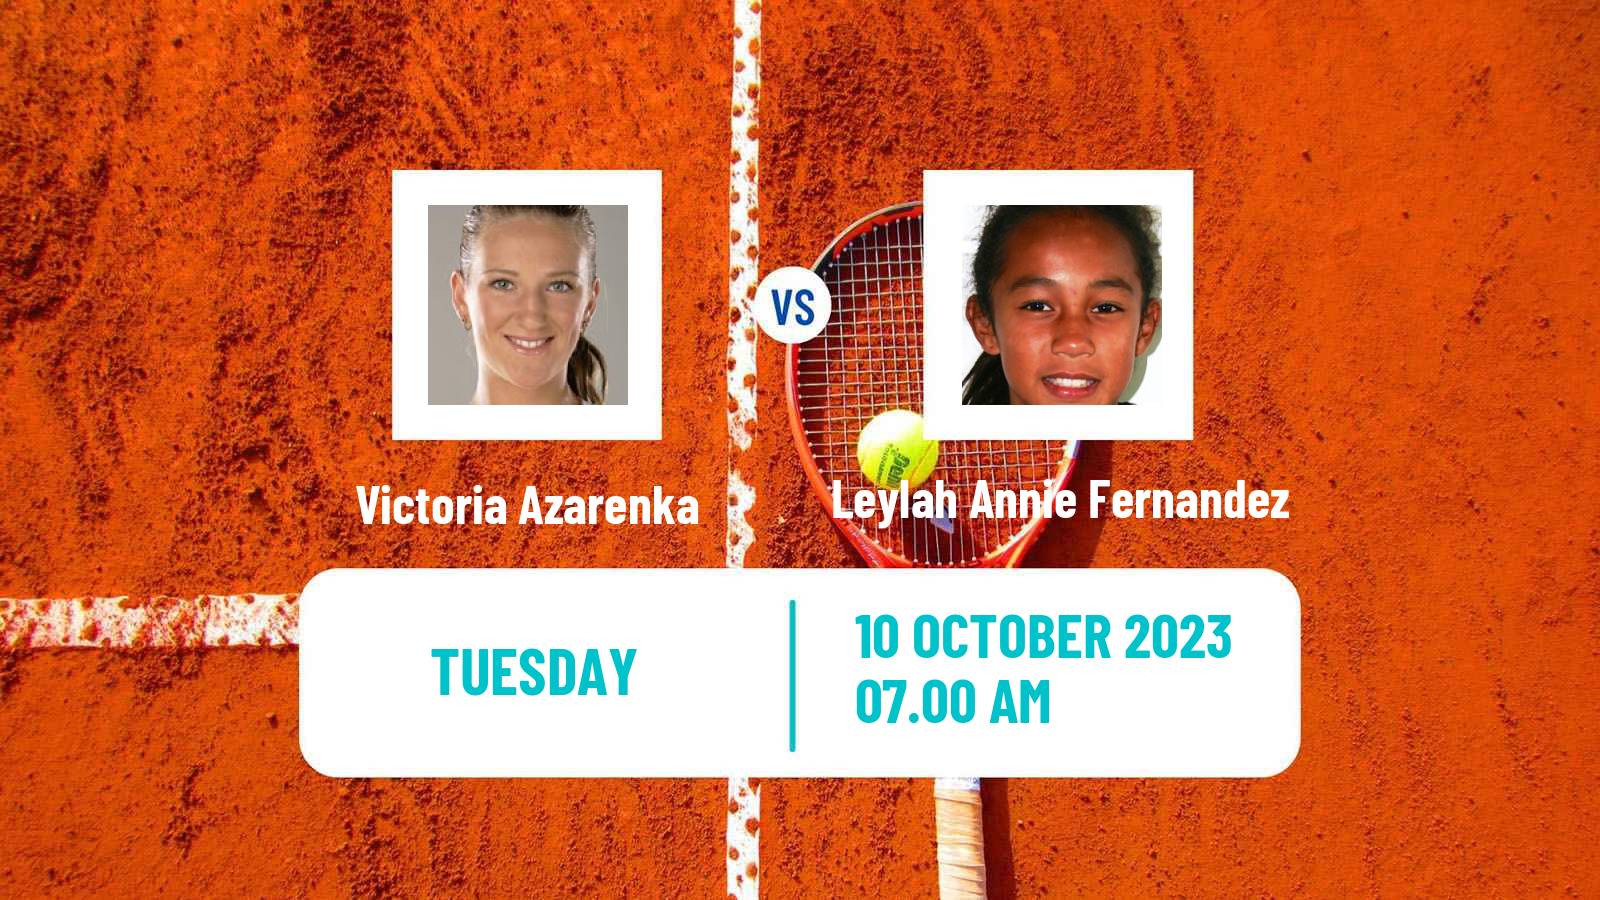 Tennis WTA Hong Kong Victoria Azarenka - Leylah Annie Fernandez